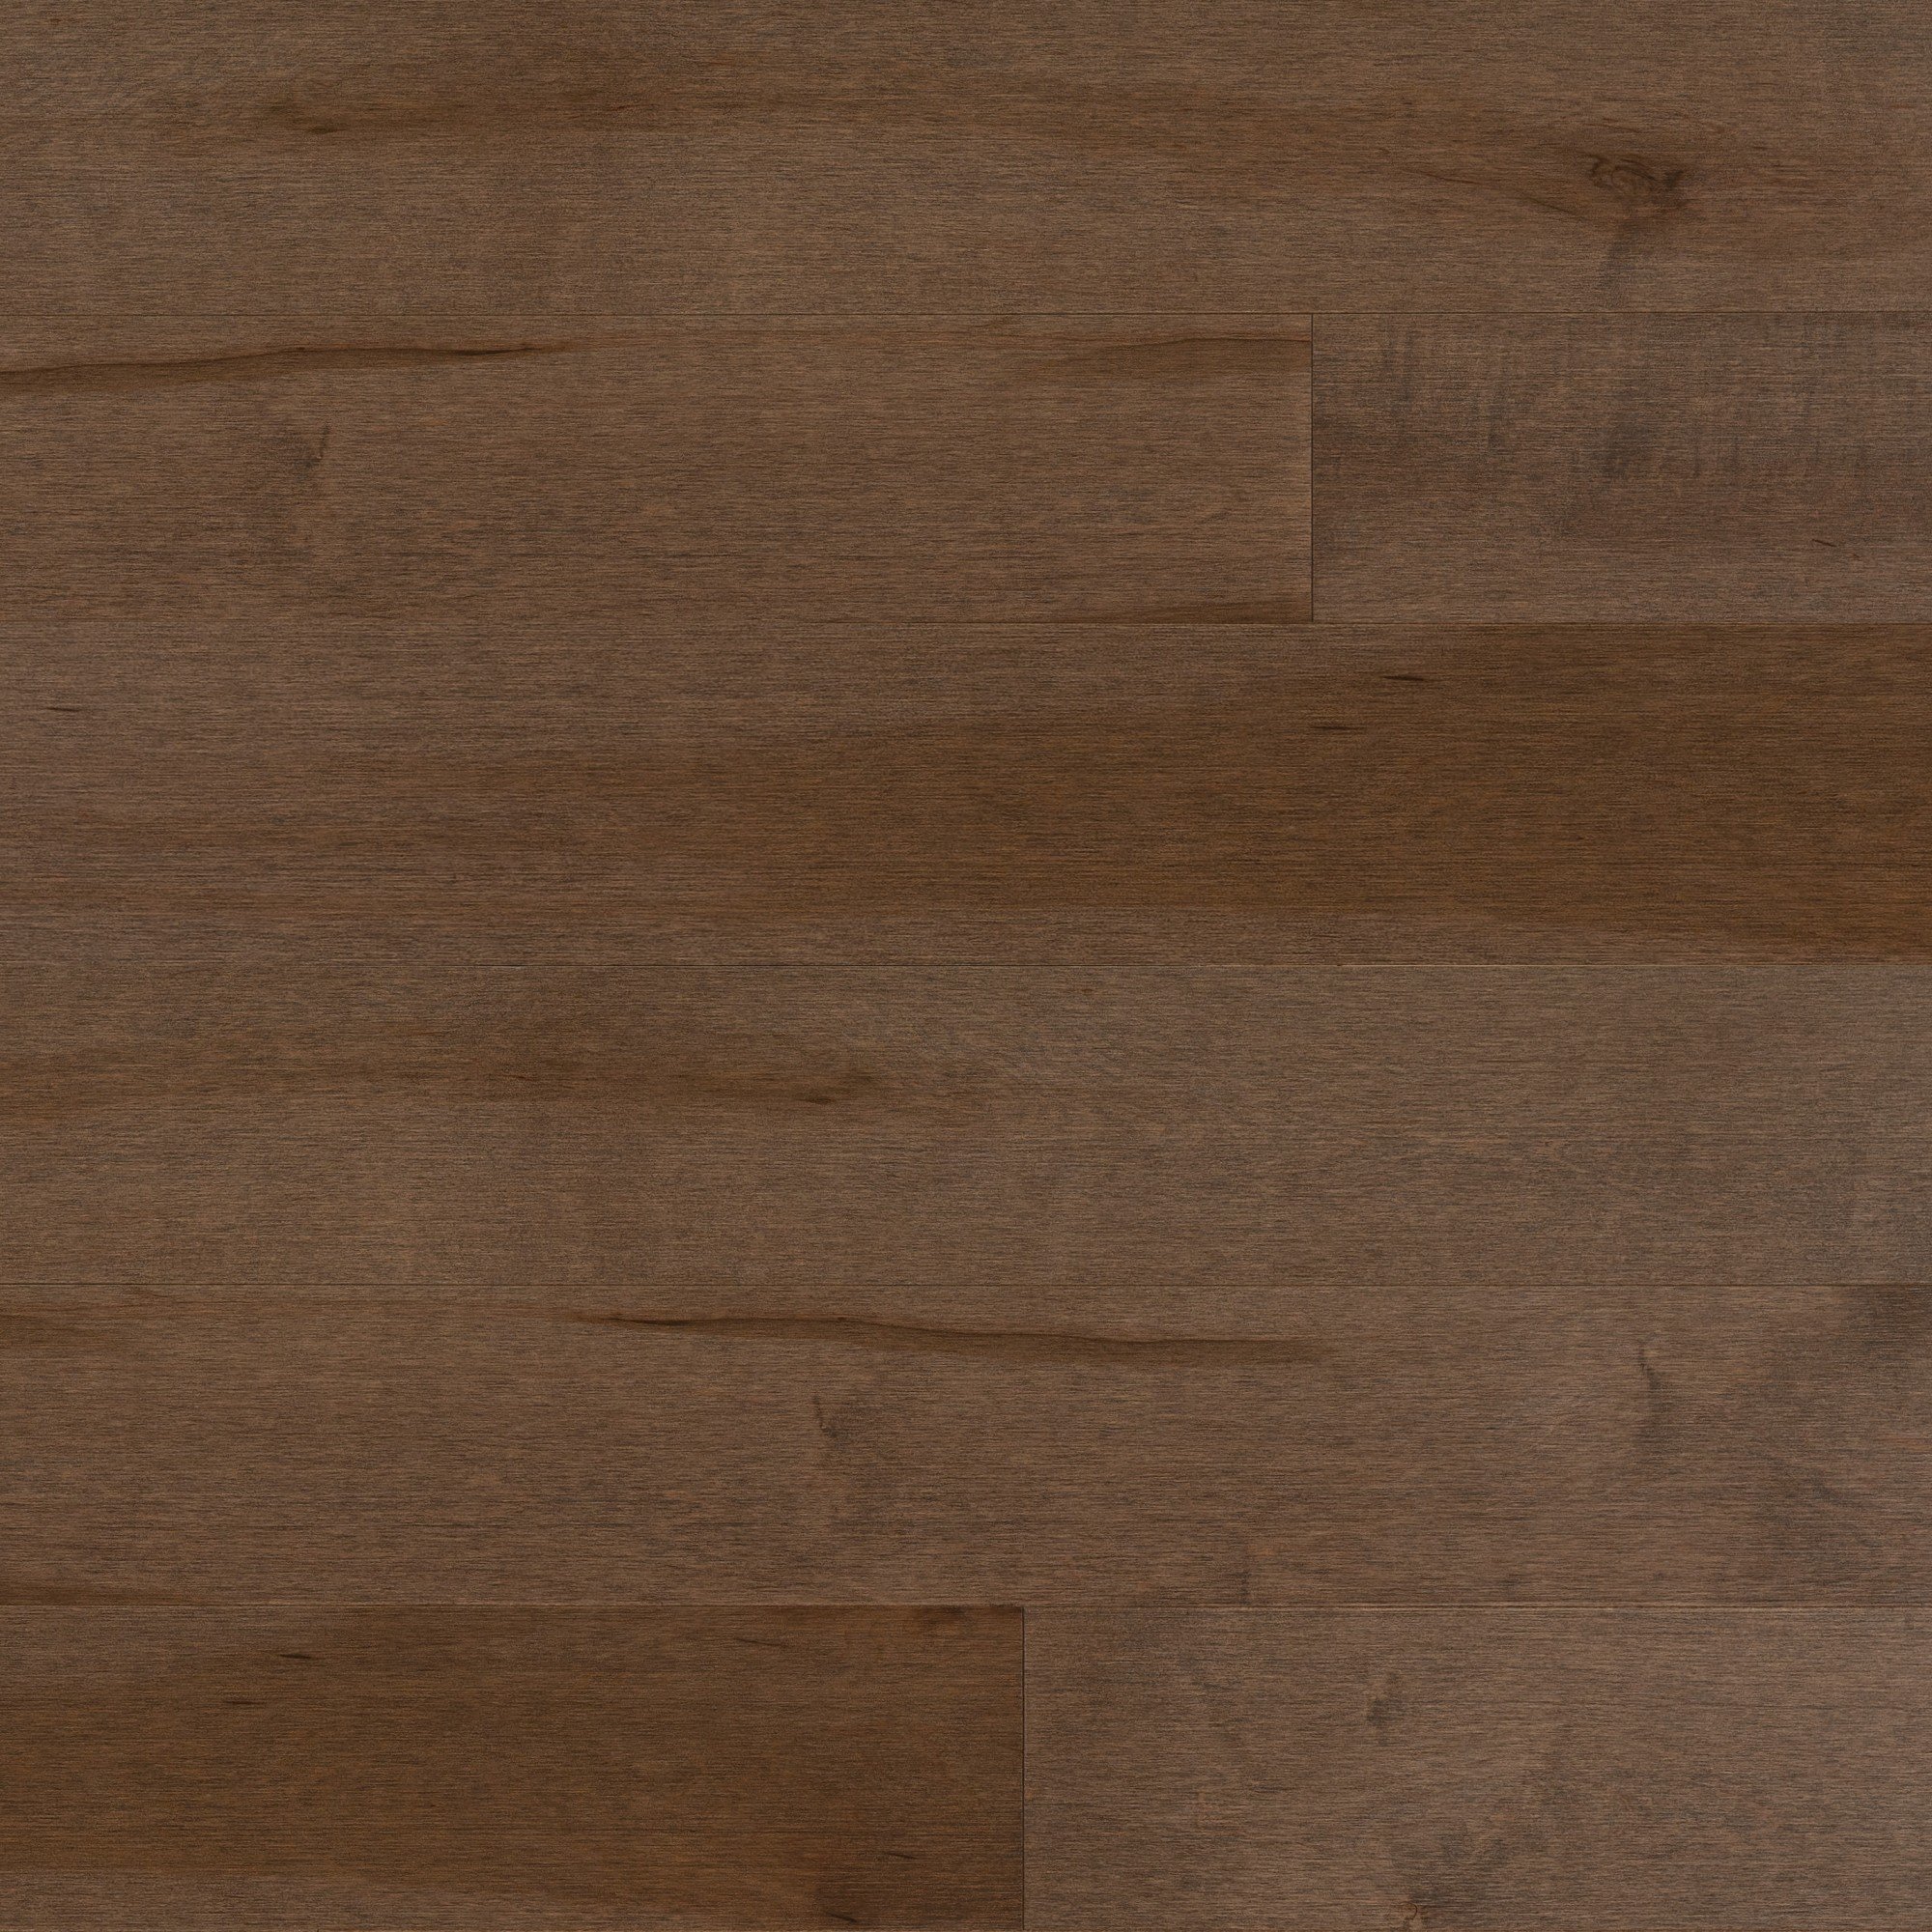 Maple Savanna Exclusive Engraved - Floor image